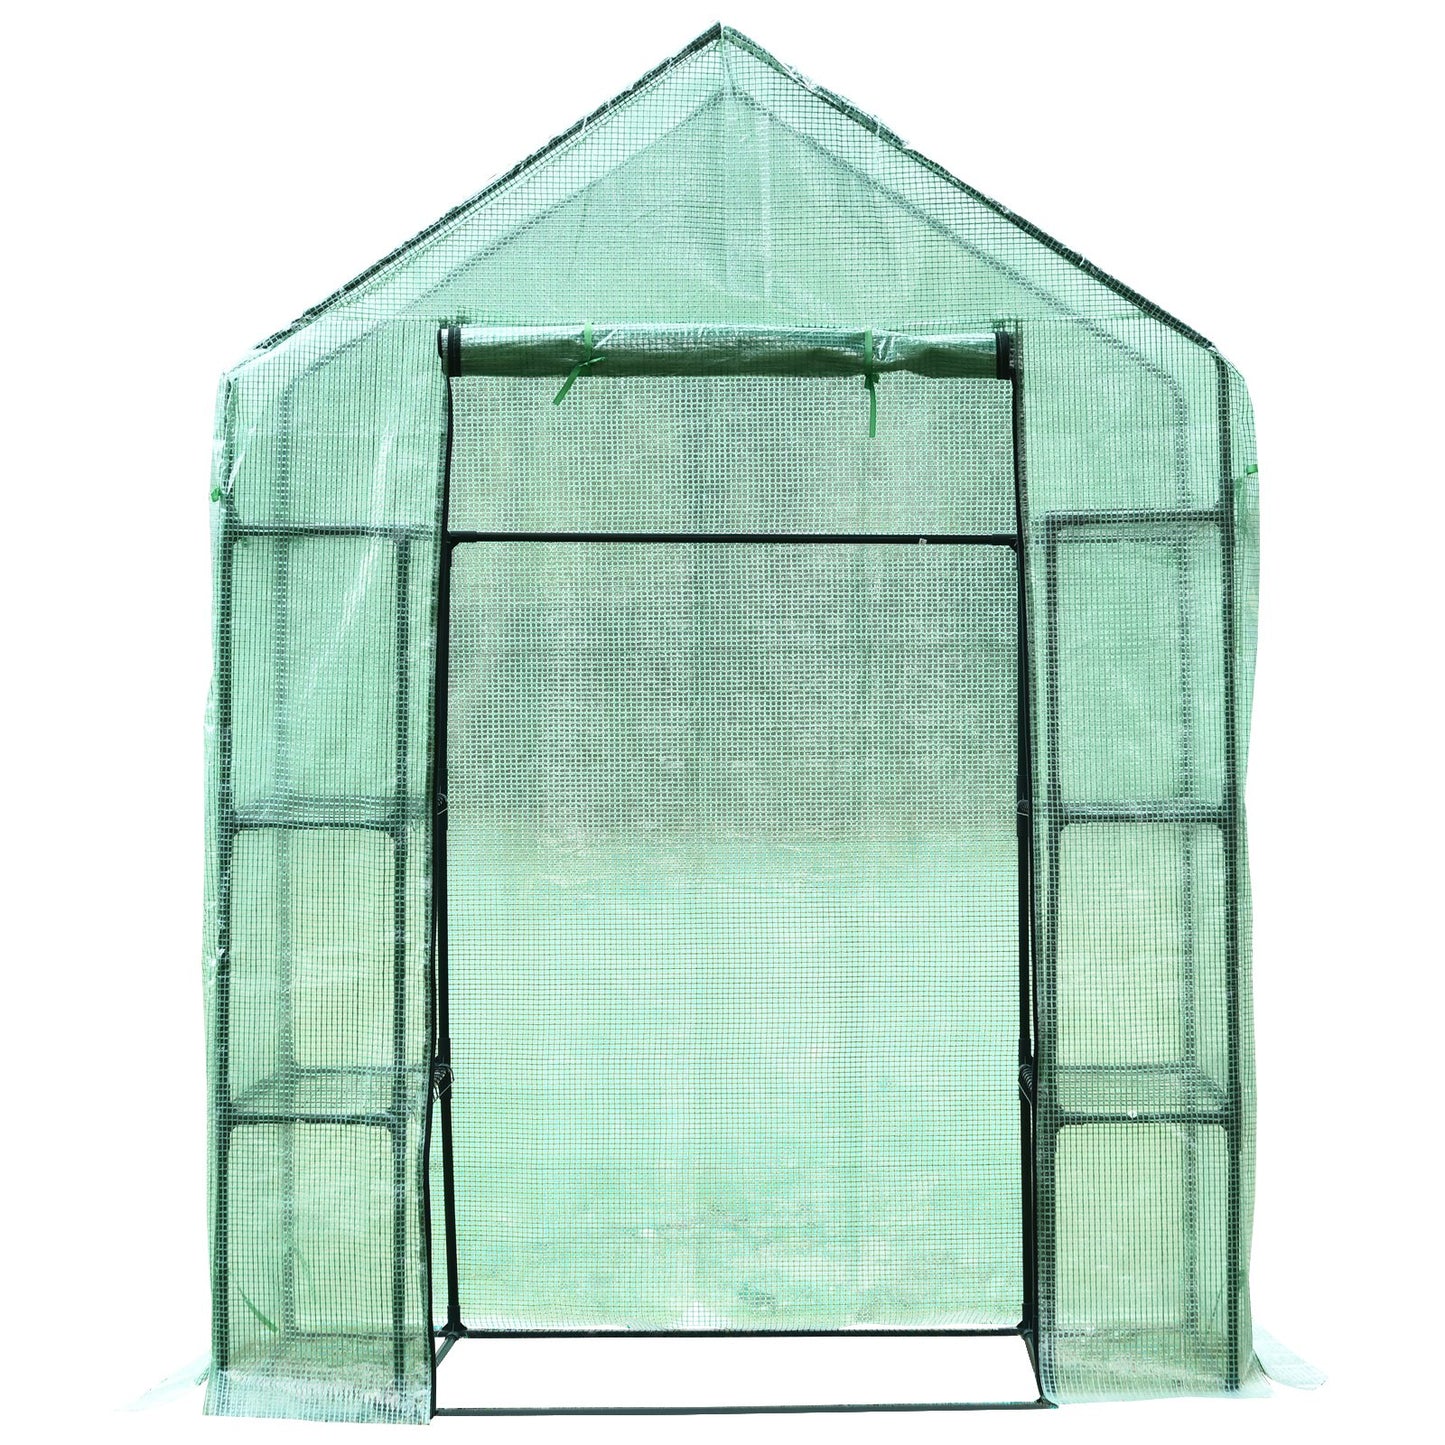 Outsunny Greenhouse W/ Shelves, 143x73x195 cm-Dark Green